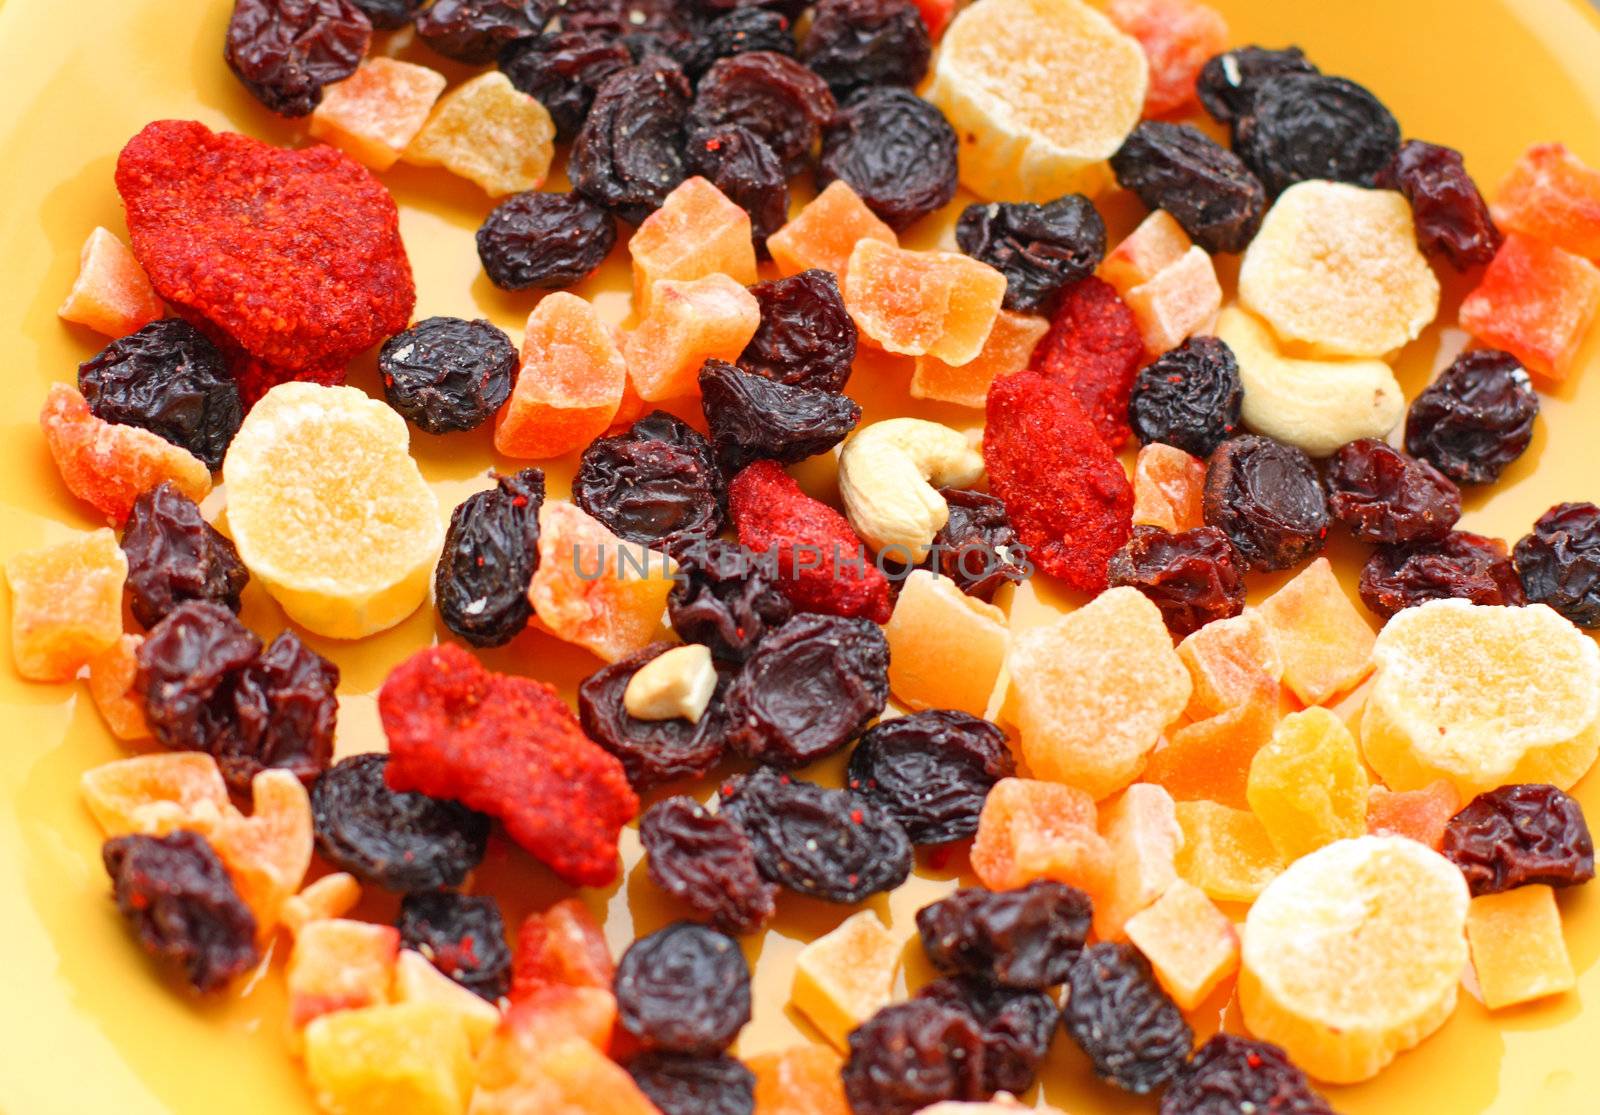 Dried fruits by Lessadar